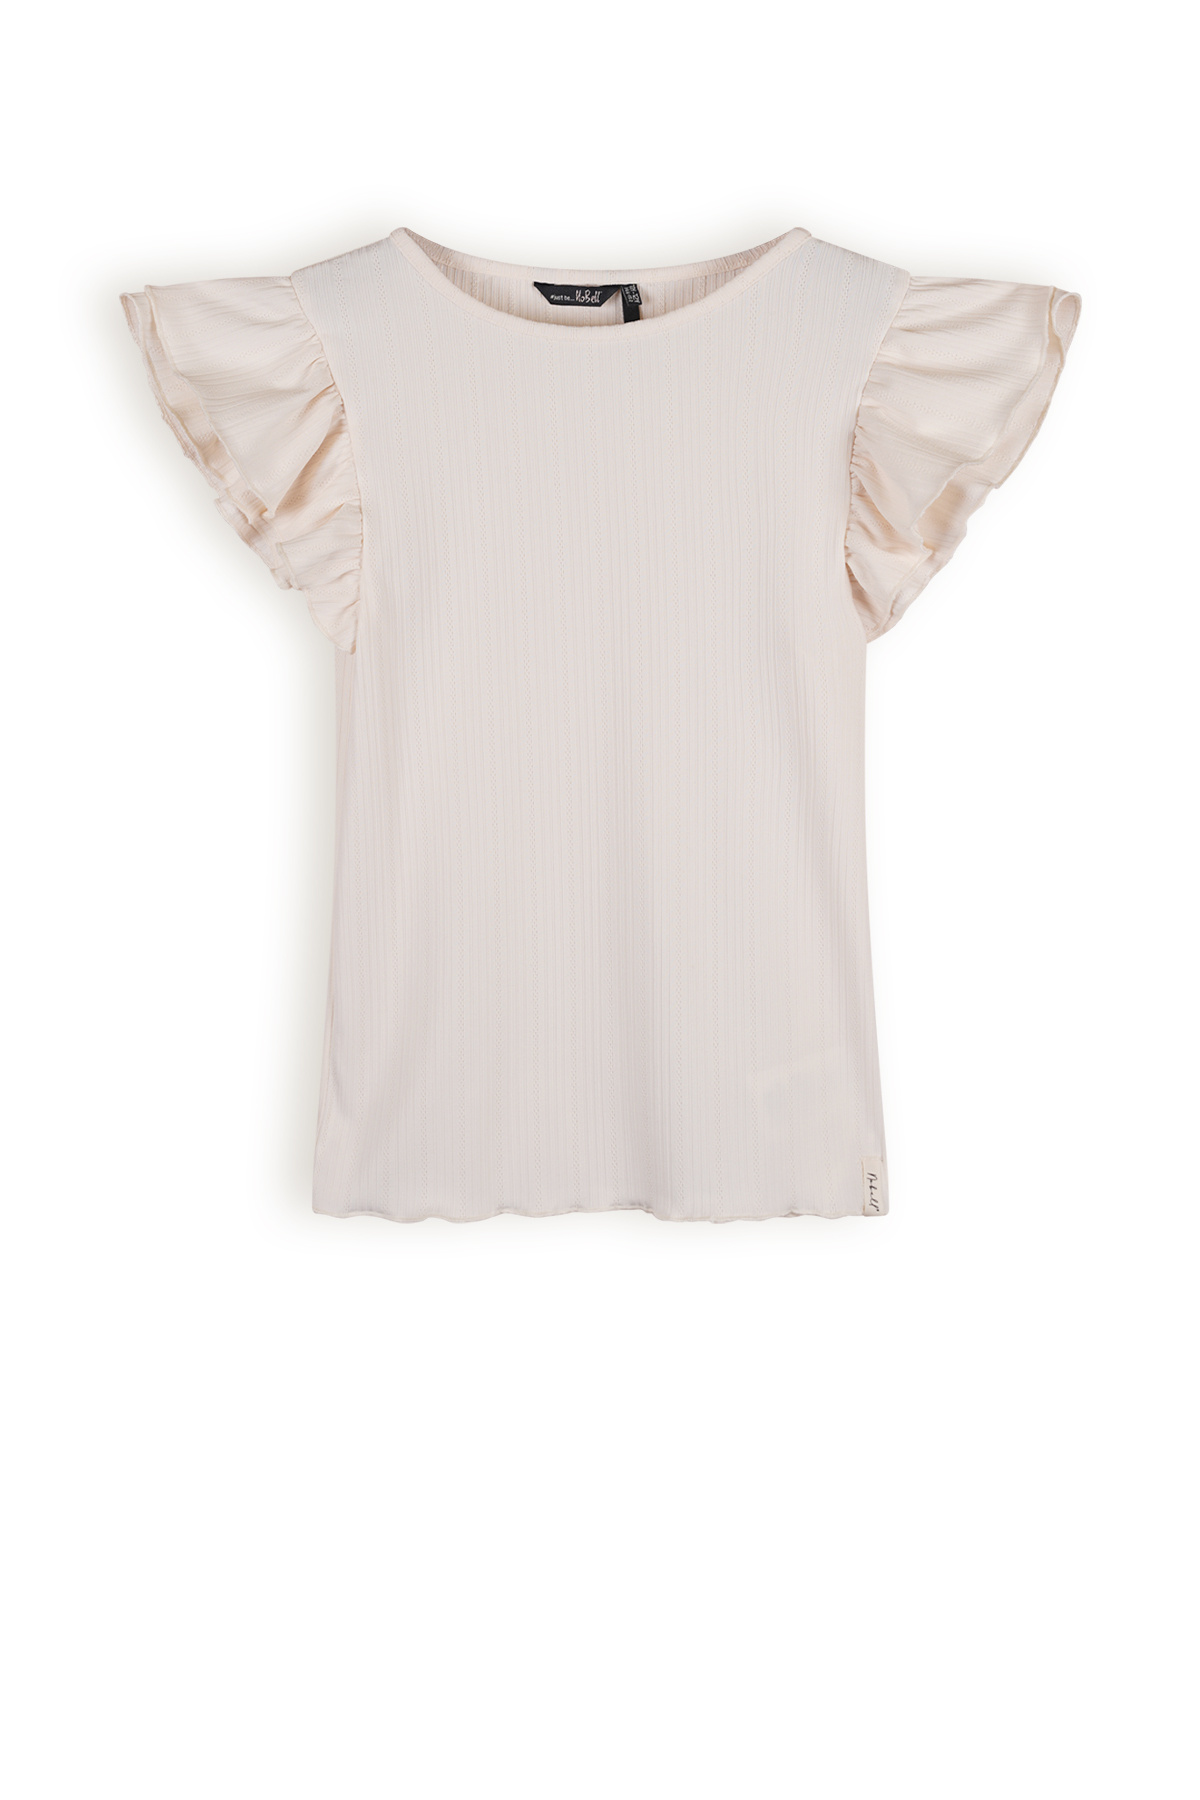 NoBell Meisjes t-shirt rib - Kiss - Pearled ivoor wit